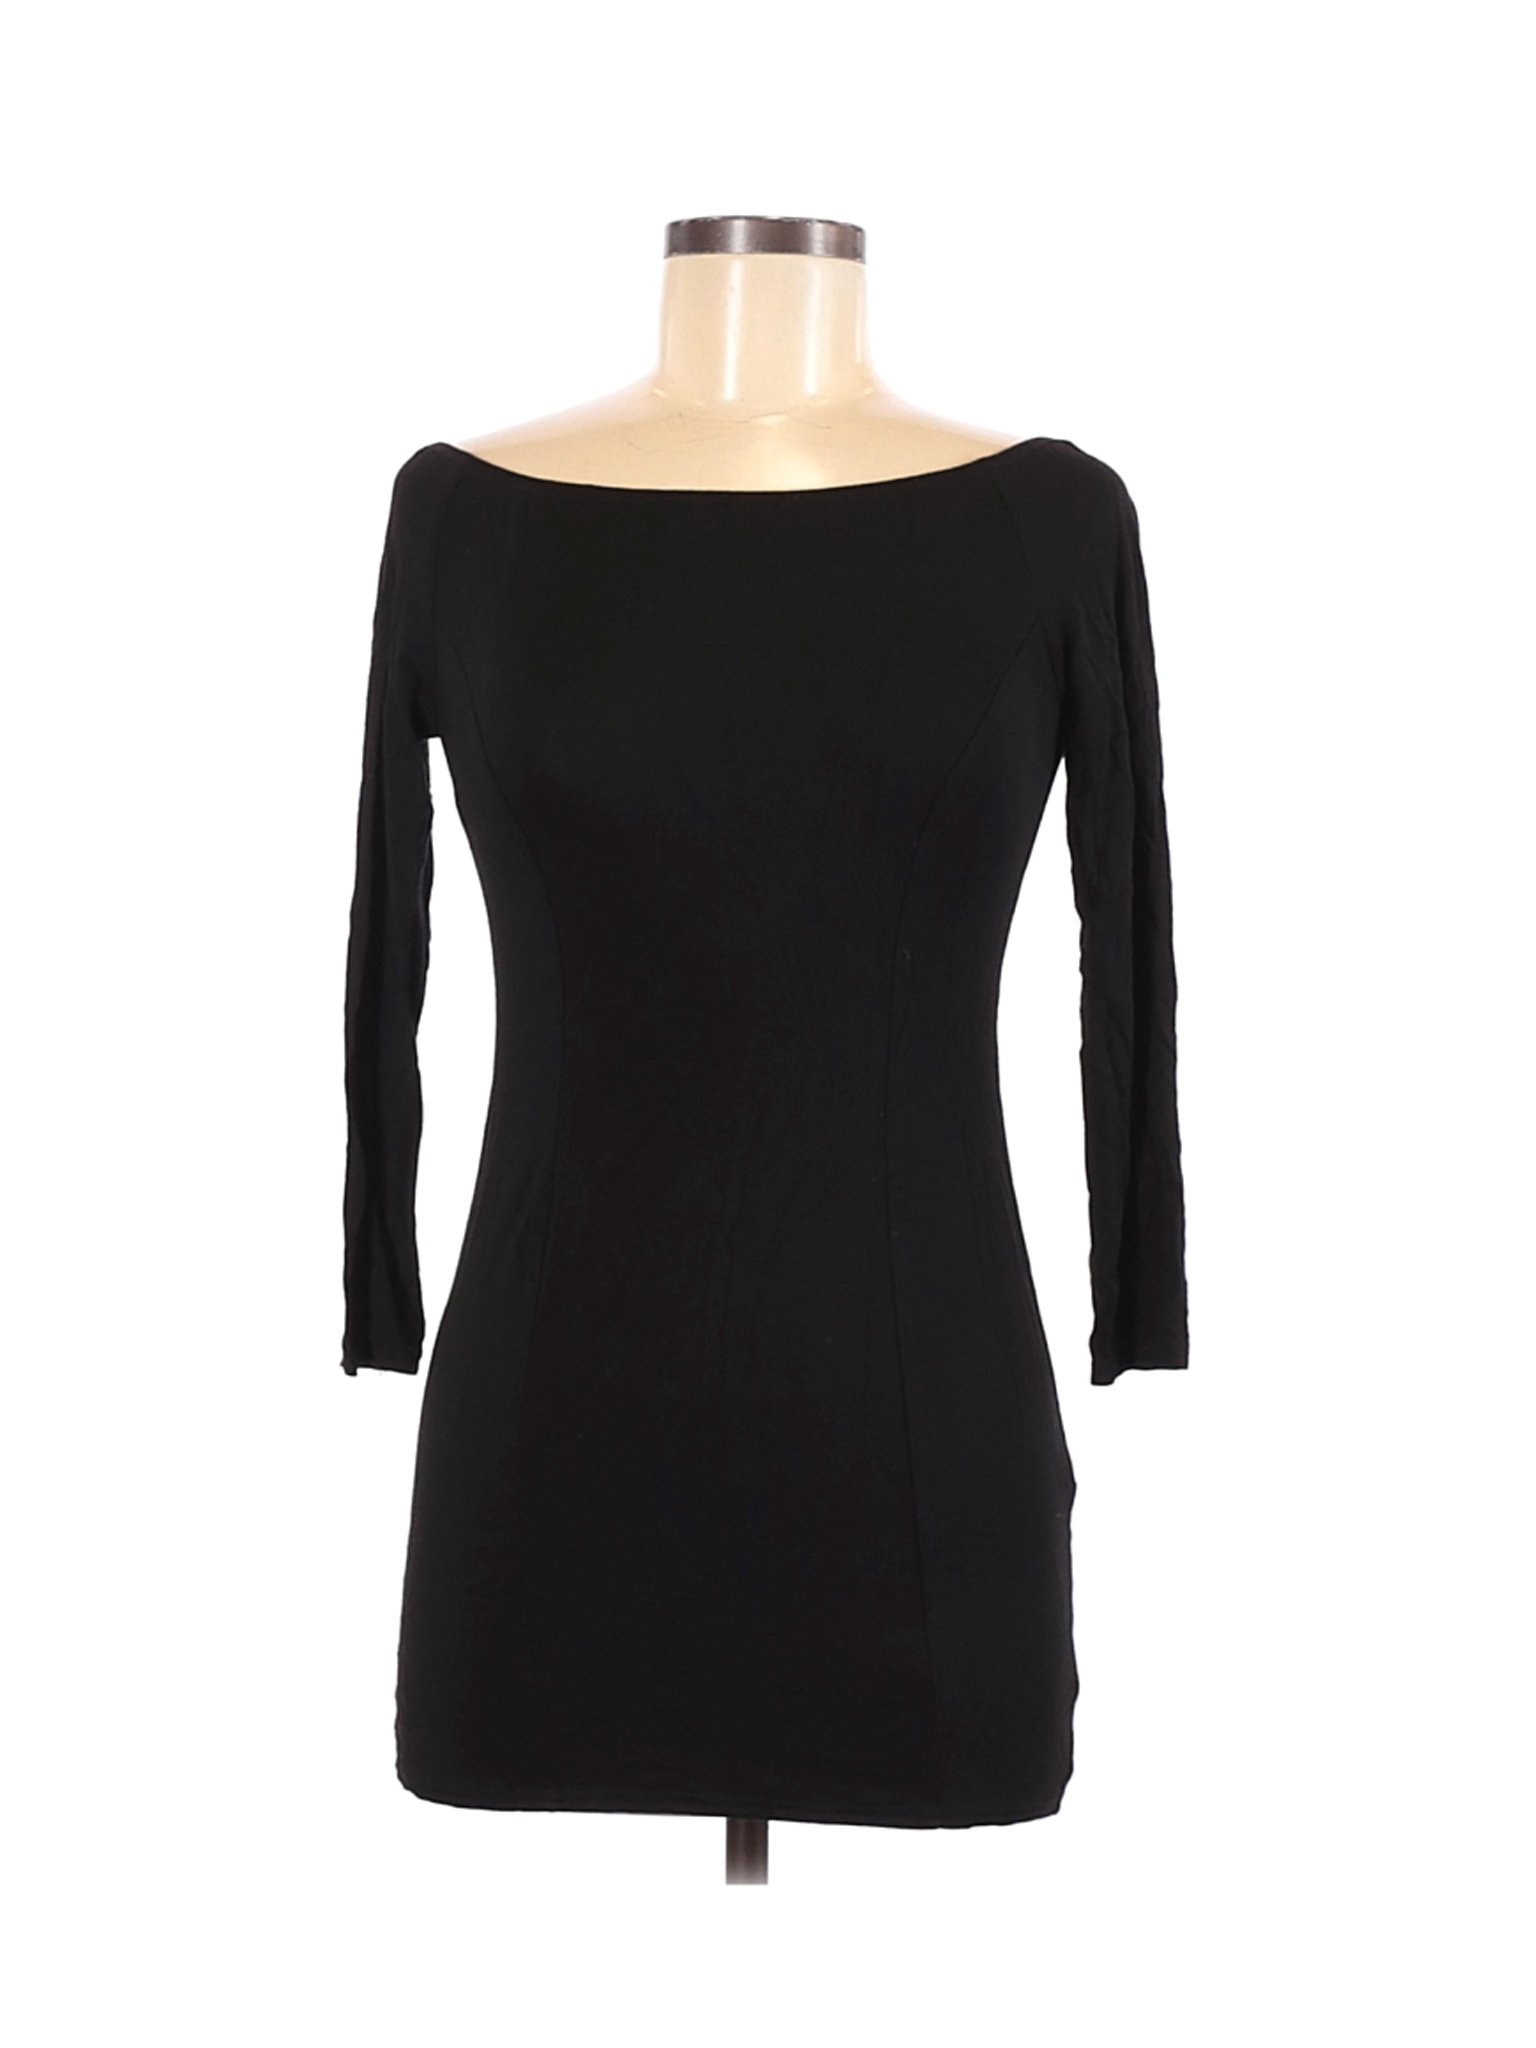 ASOS Women Black 3/4 Sleeve Top 8 | eBay